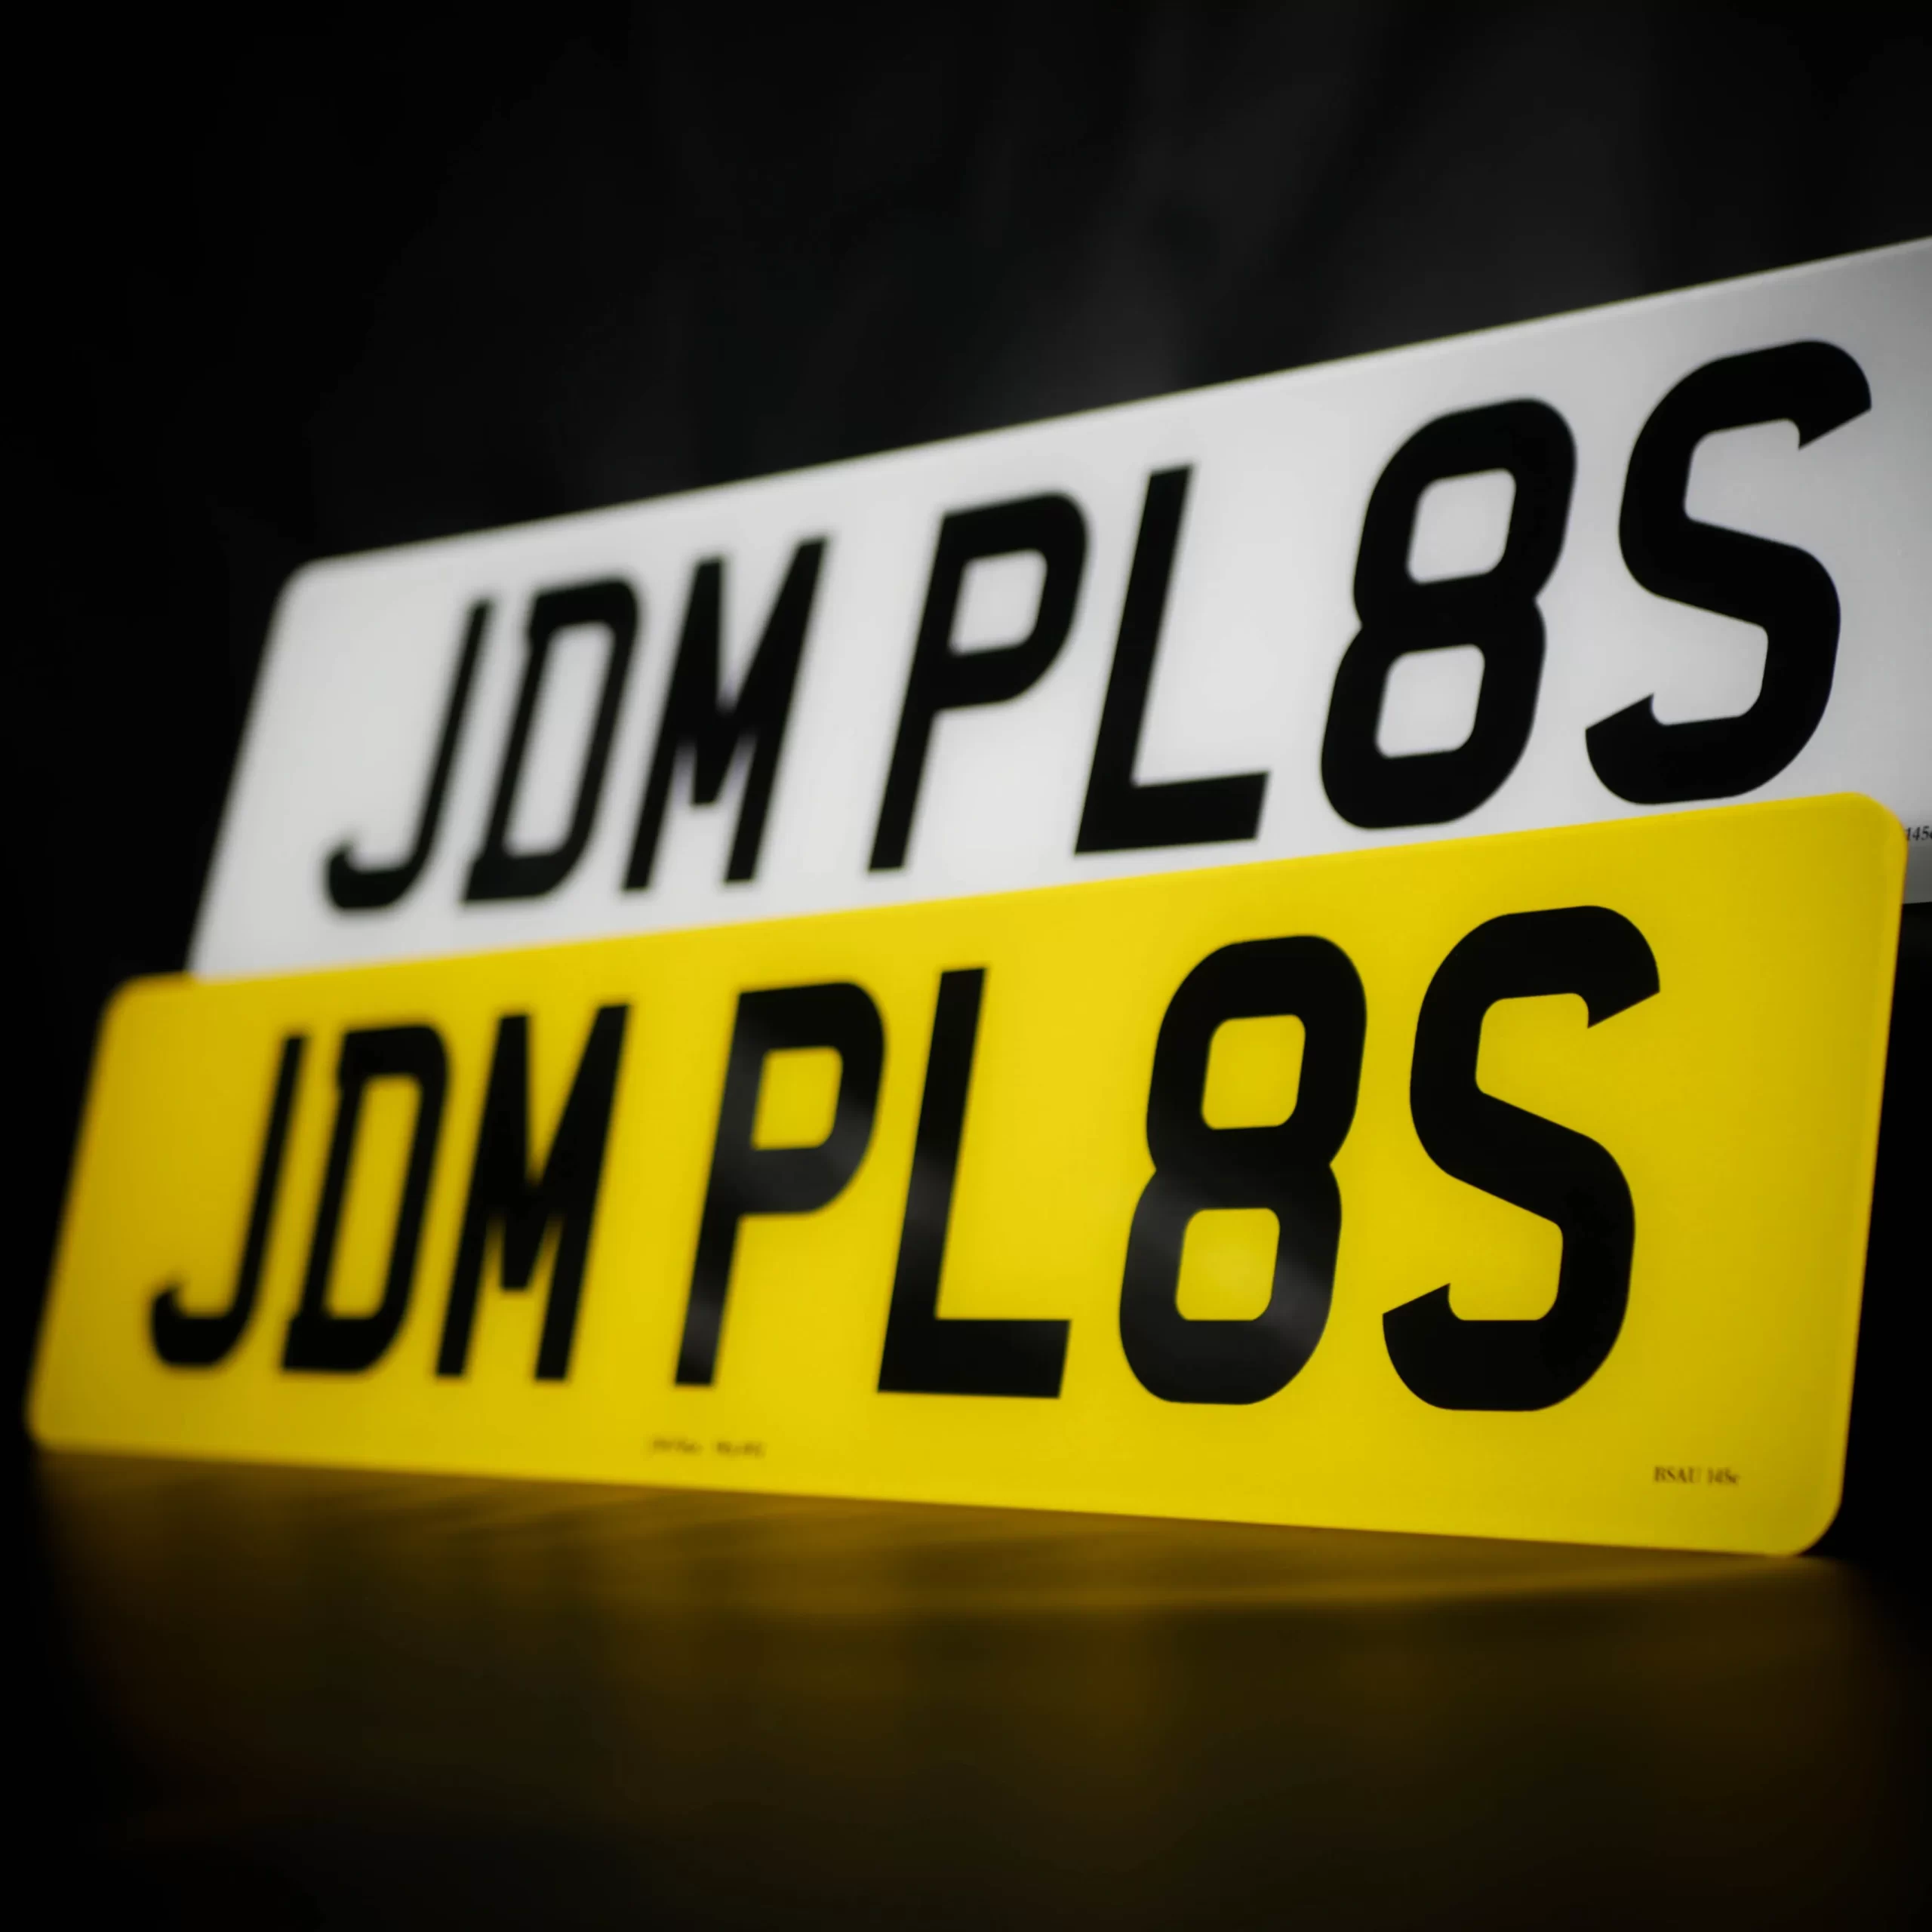 https://www.jdmplates.co.uk/wp-content/uploads/Printed-Number-Plate-Standard-UK-Size-scaled.webp